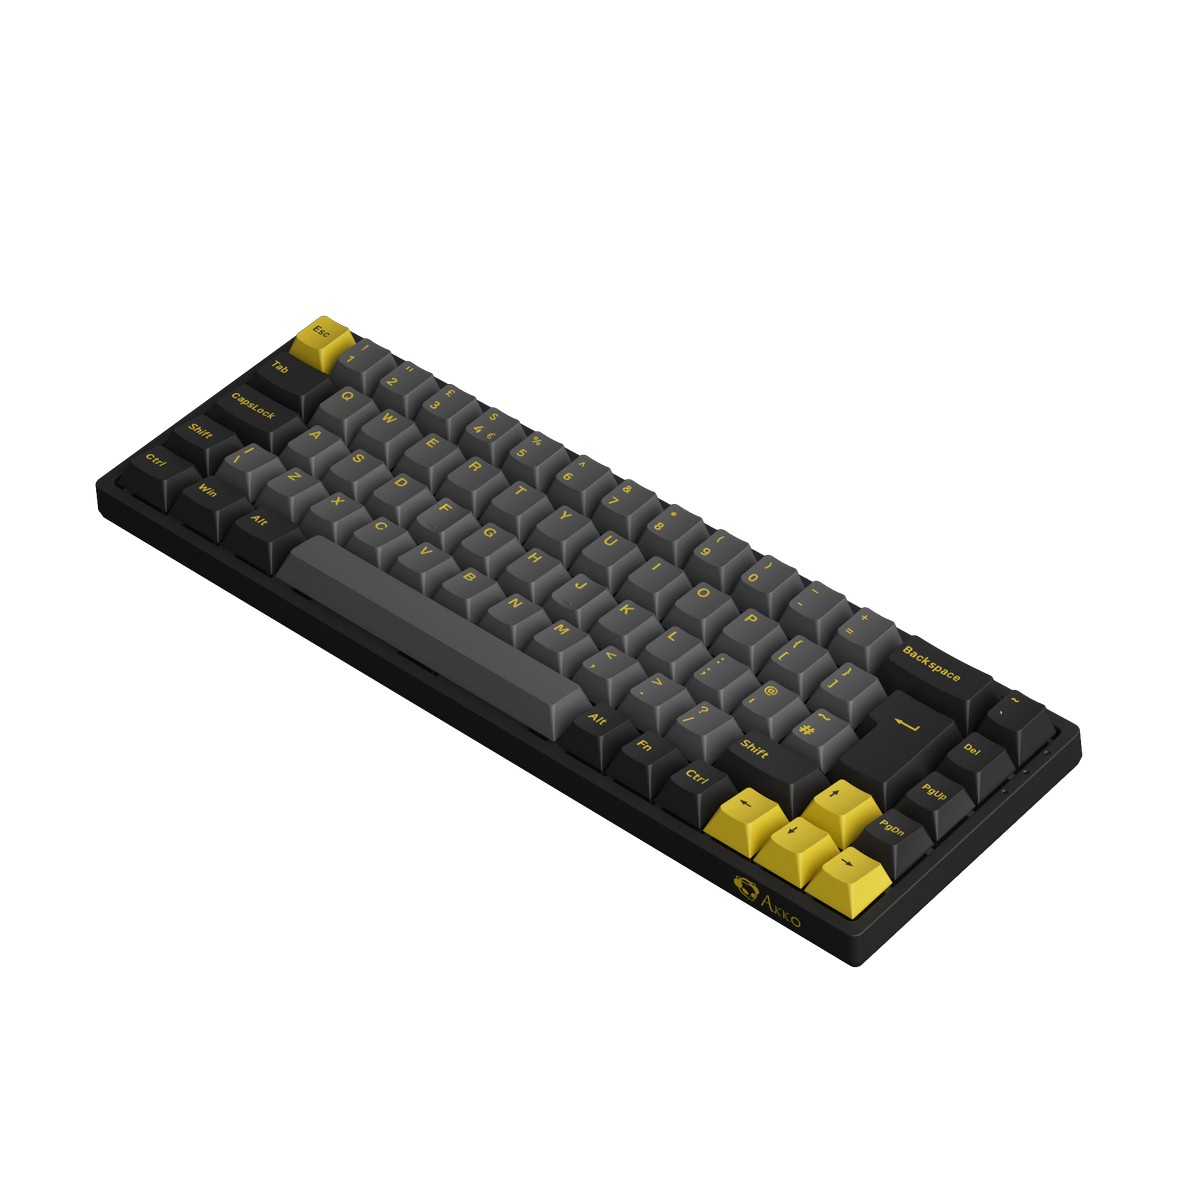 AKKO 3068B Plus Black&Gold USB RGB Mechanical Gaming Keyboard CS Jelly Pink Switch UK ISO